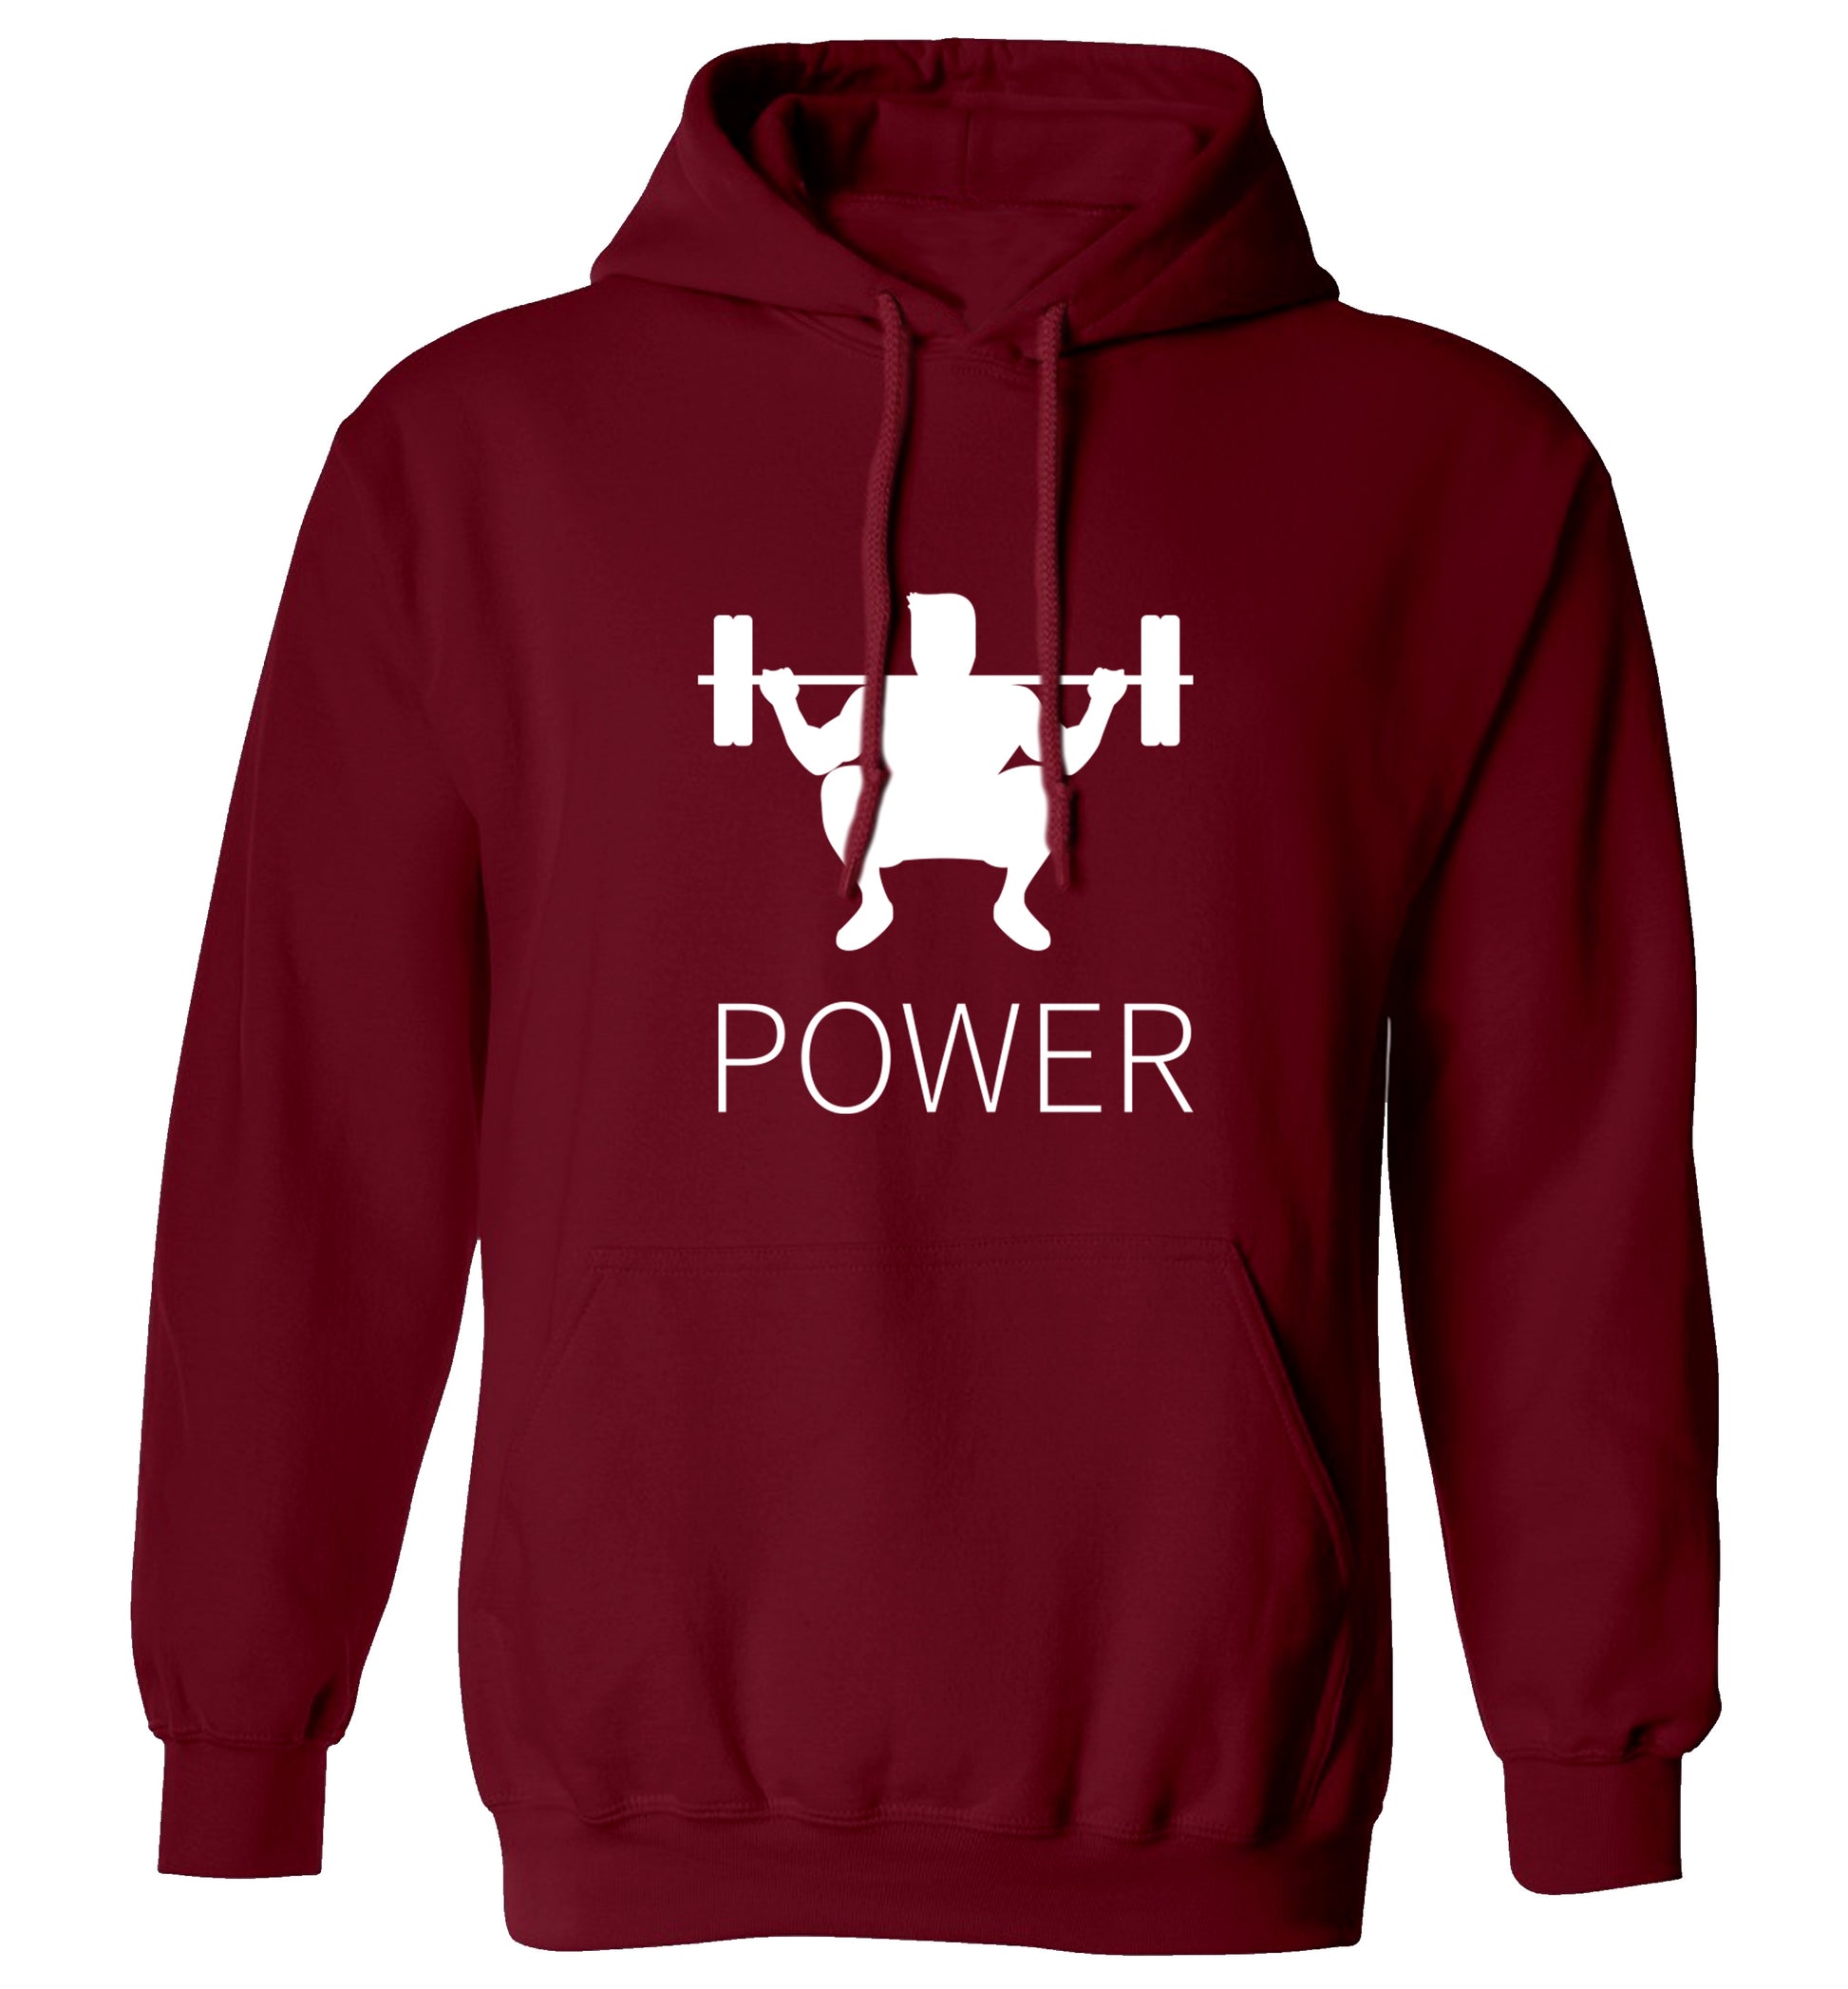 Lift power adults unisex maroon hoodie 2XL